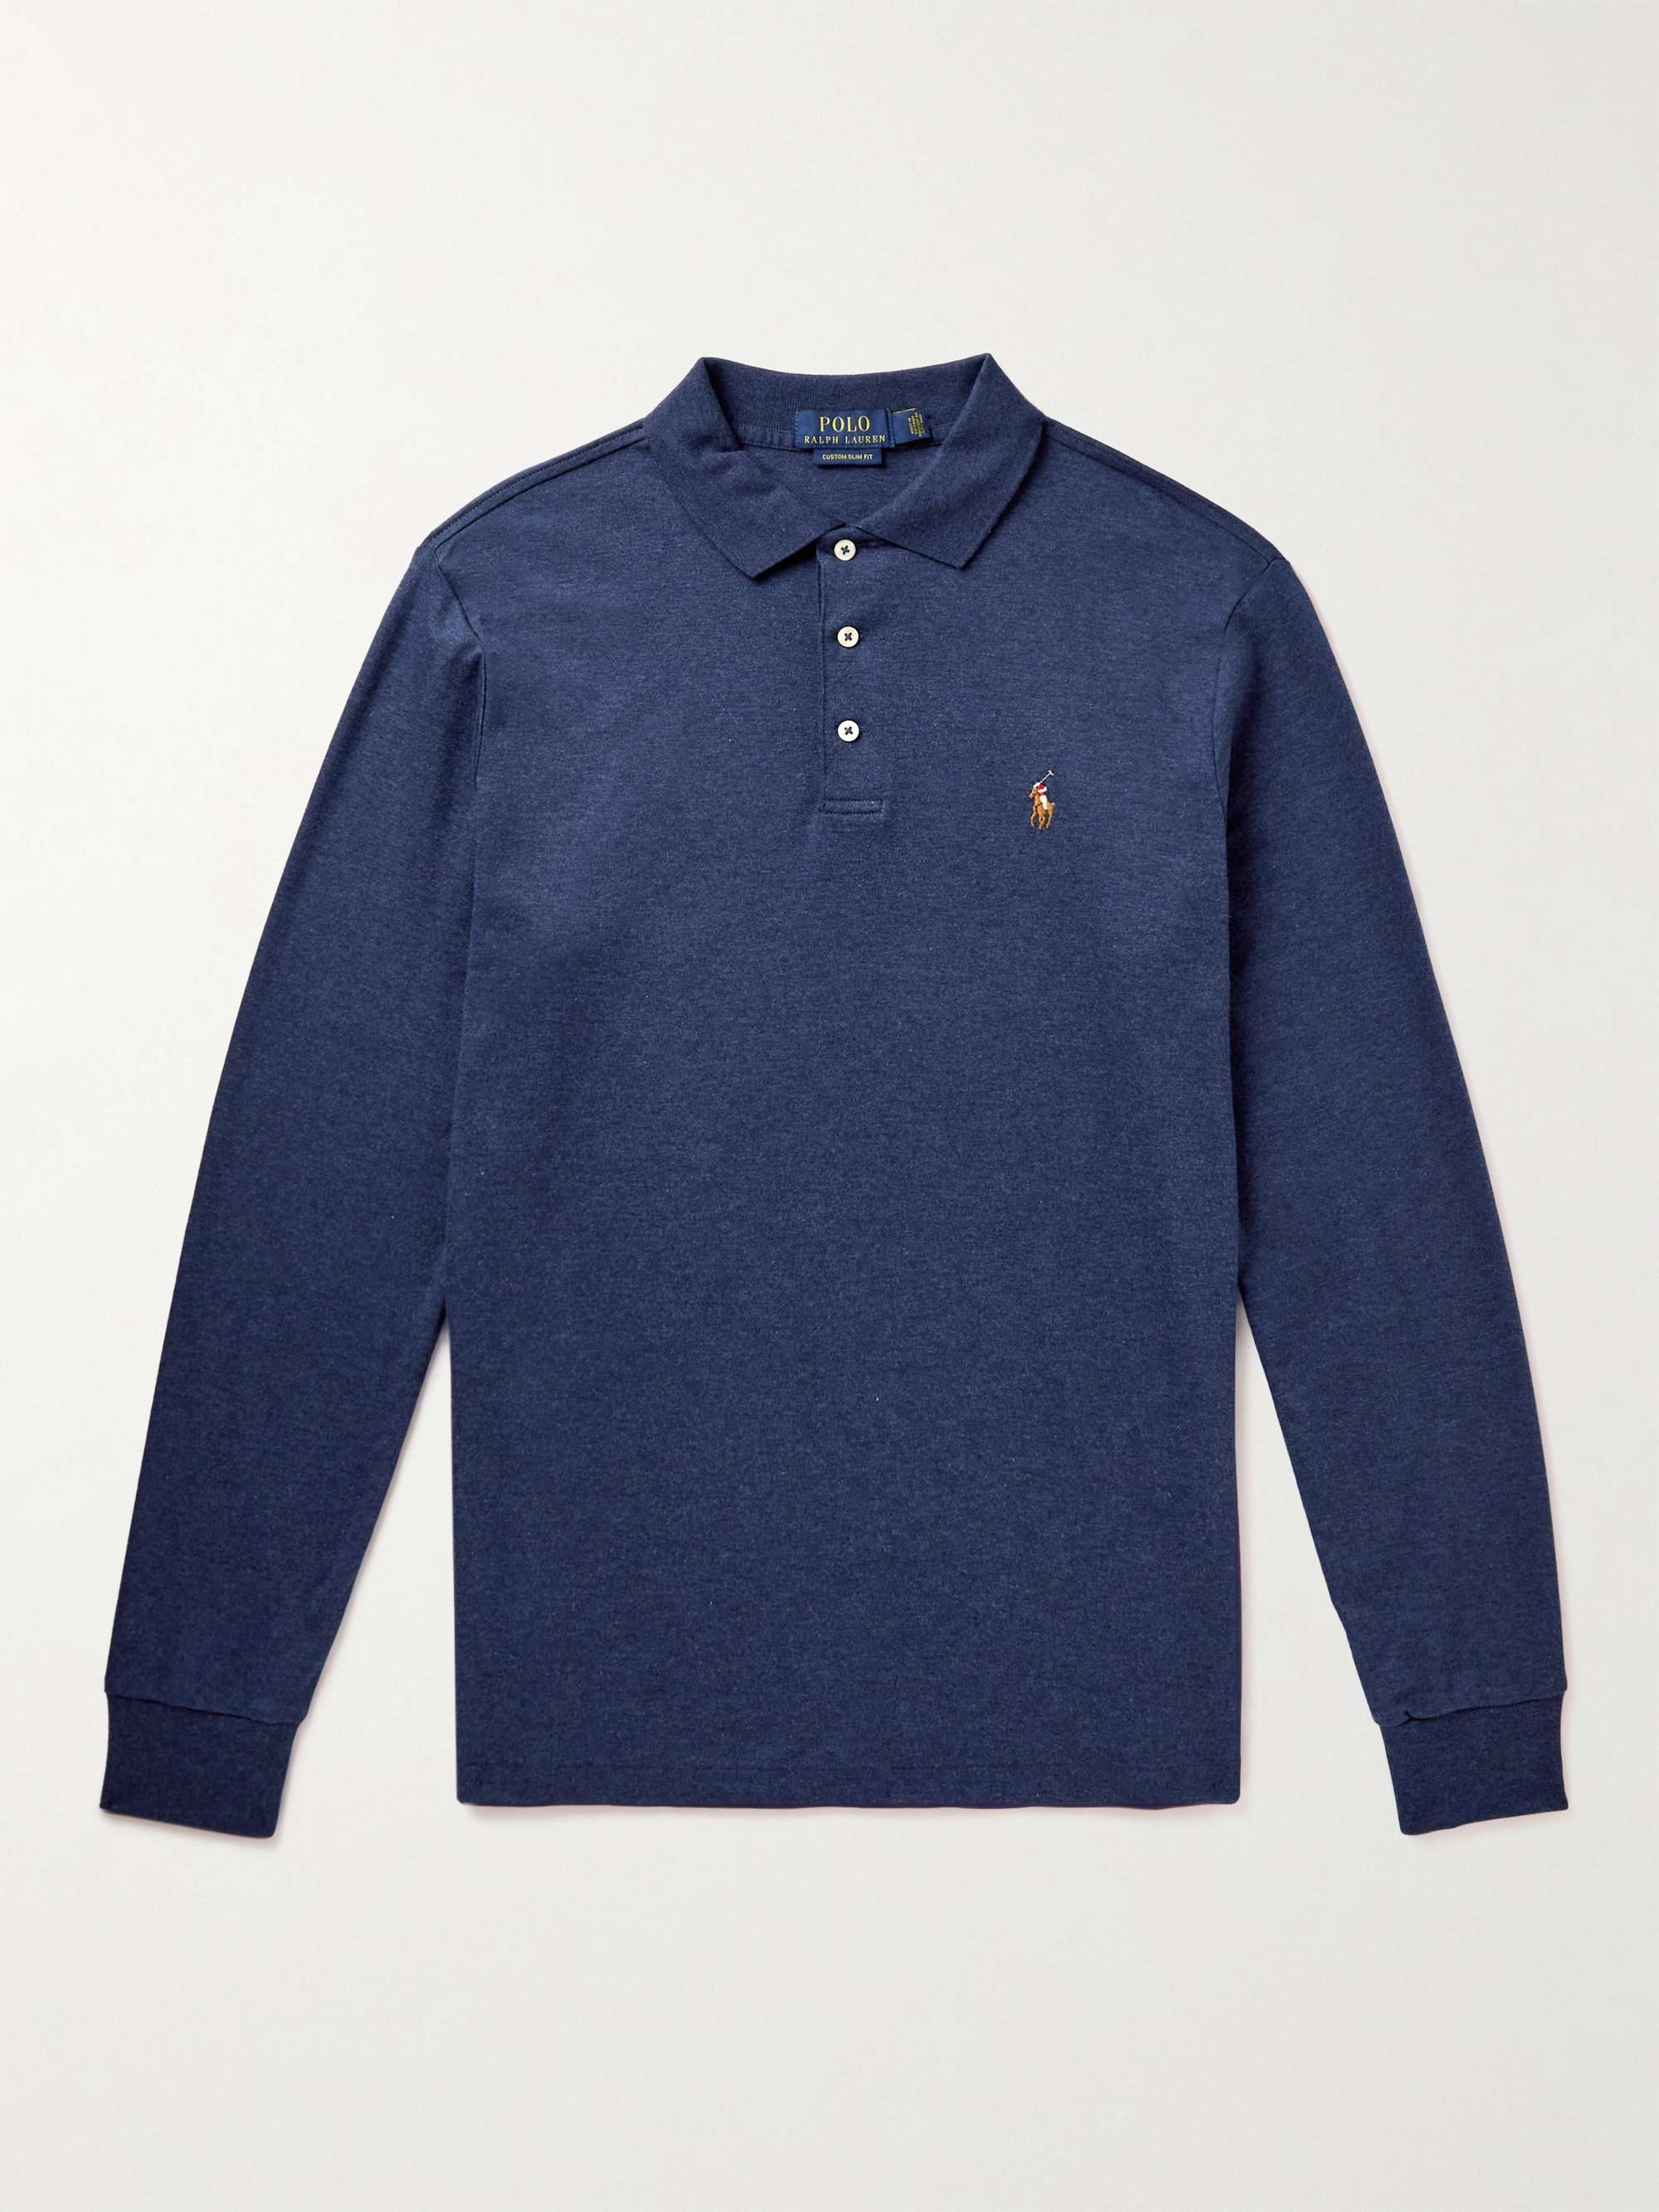 Polo RALPH LAUREN Logo-Embroidered Cotton-Jersey Polo Shirt,Navy